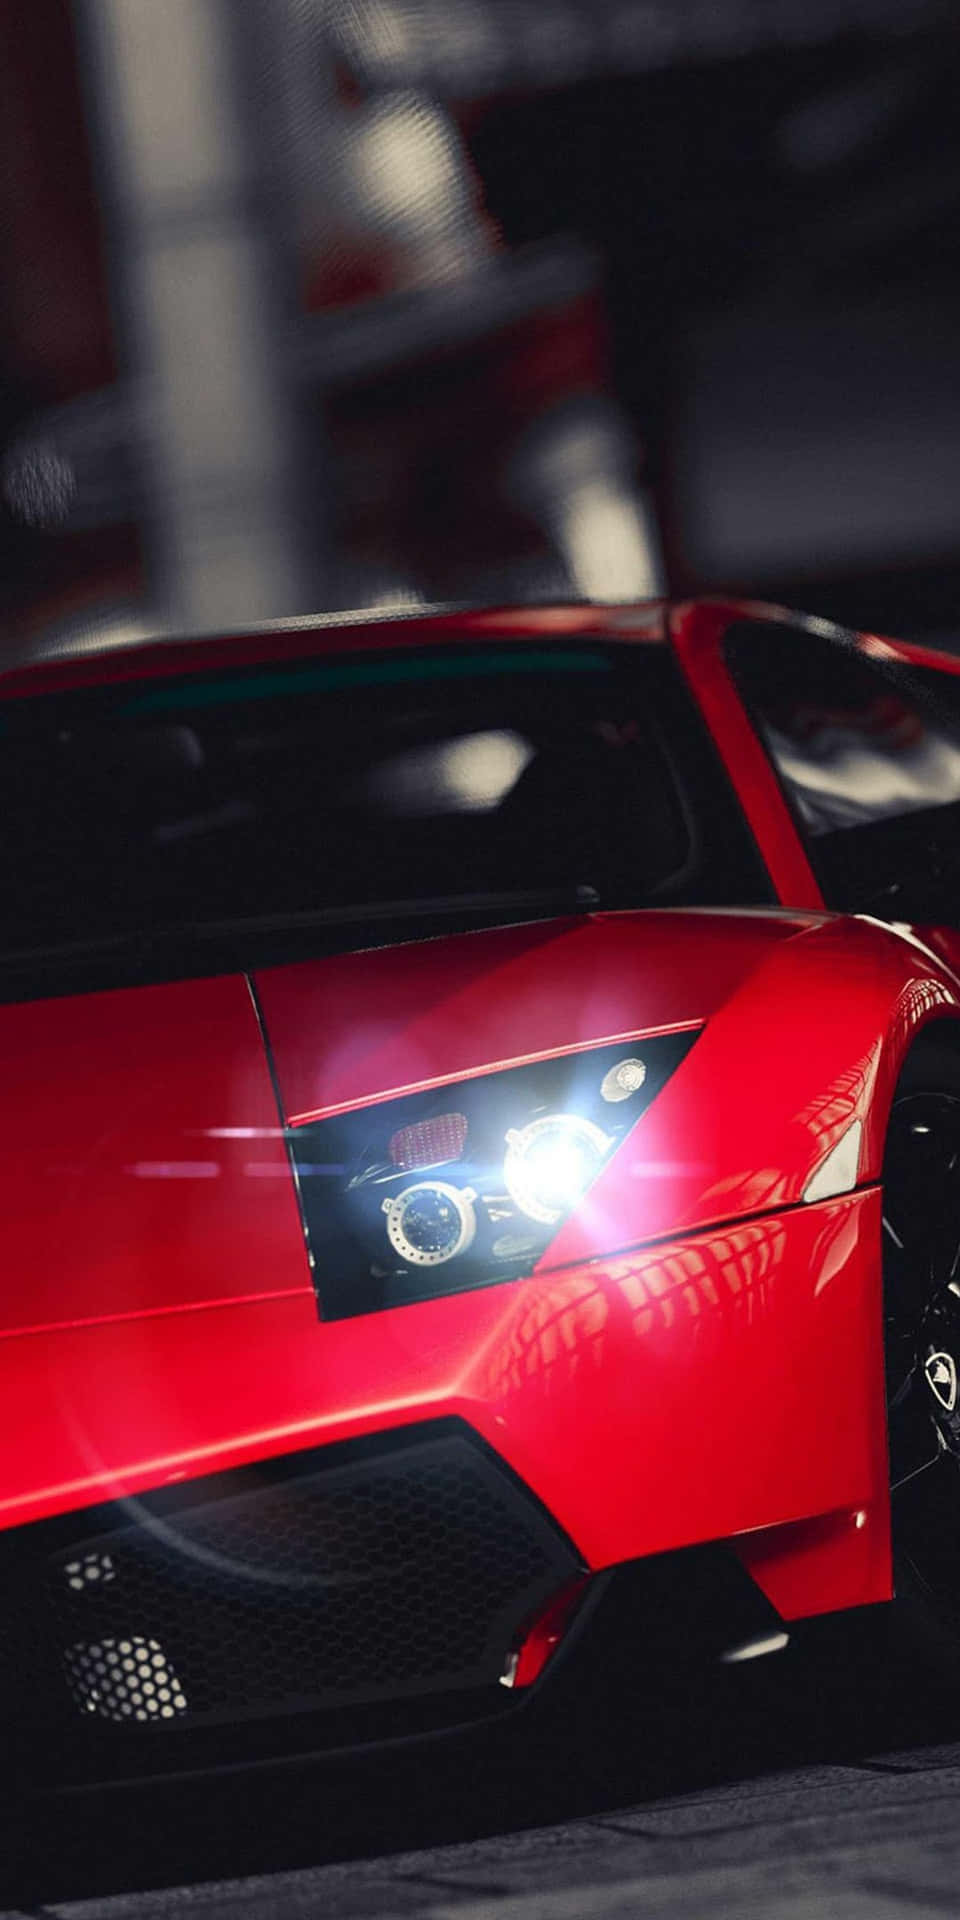 The race-ready Pixel 3 Lamborghini, ready to redefine speed.